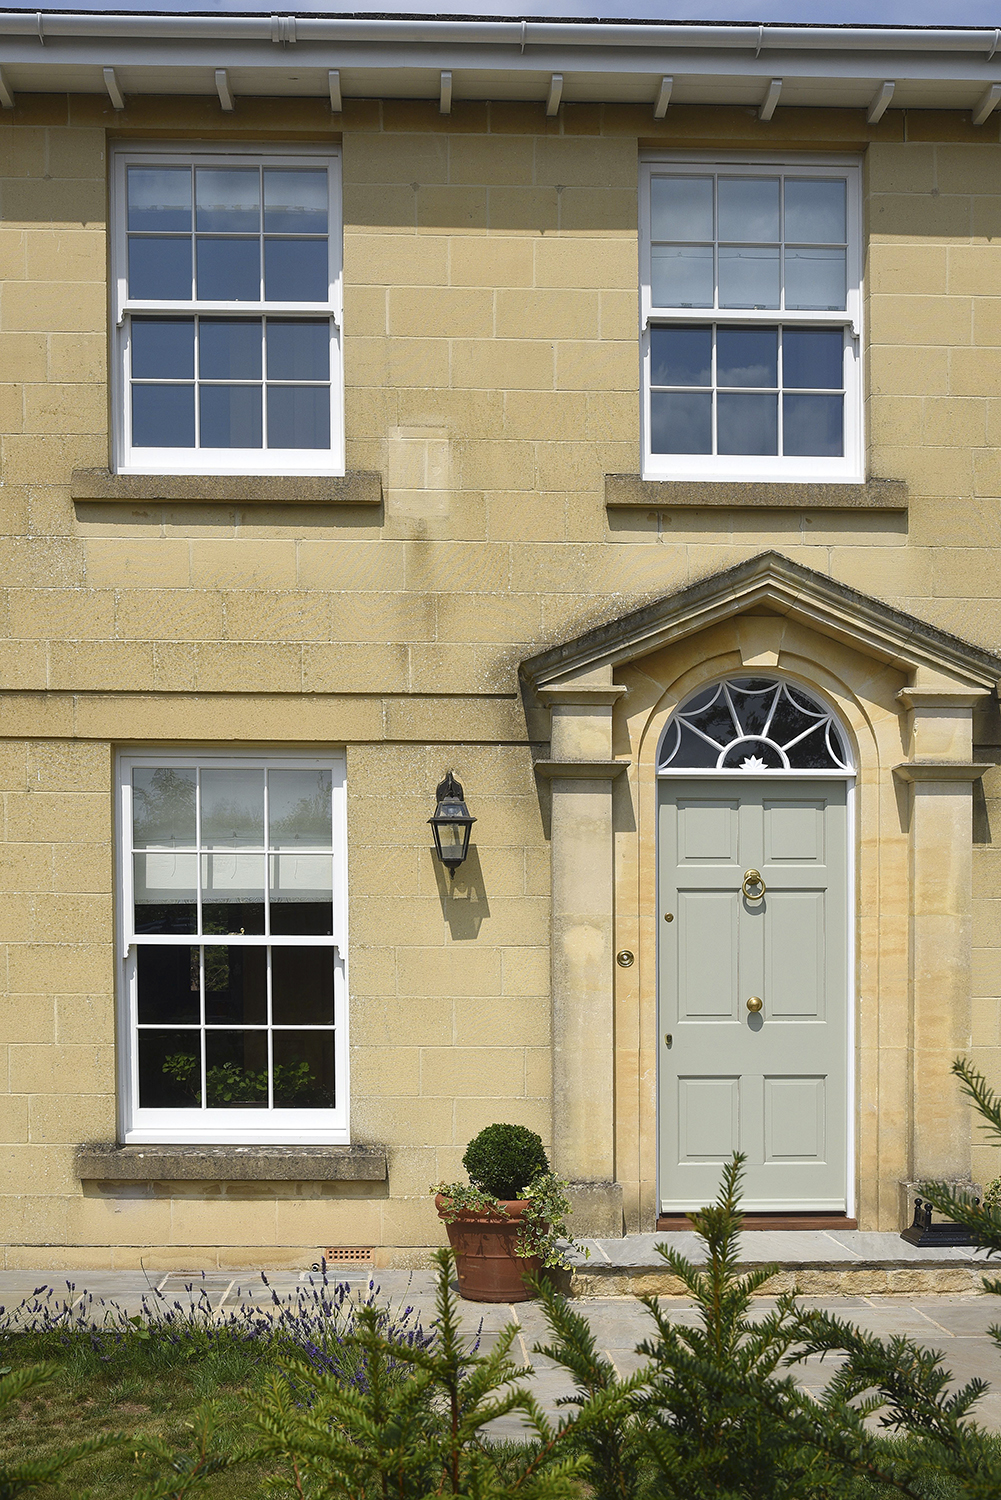 Mumford & Wood install sash windows to suit stone architecture